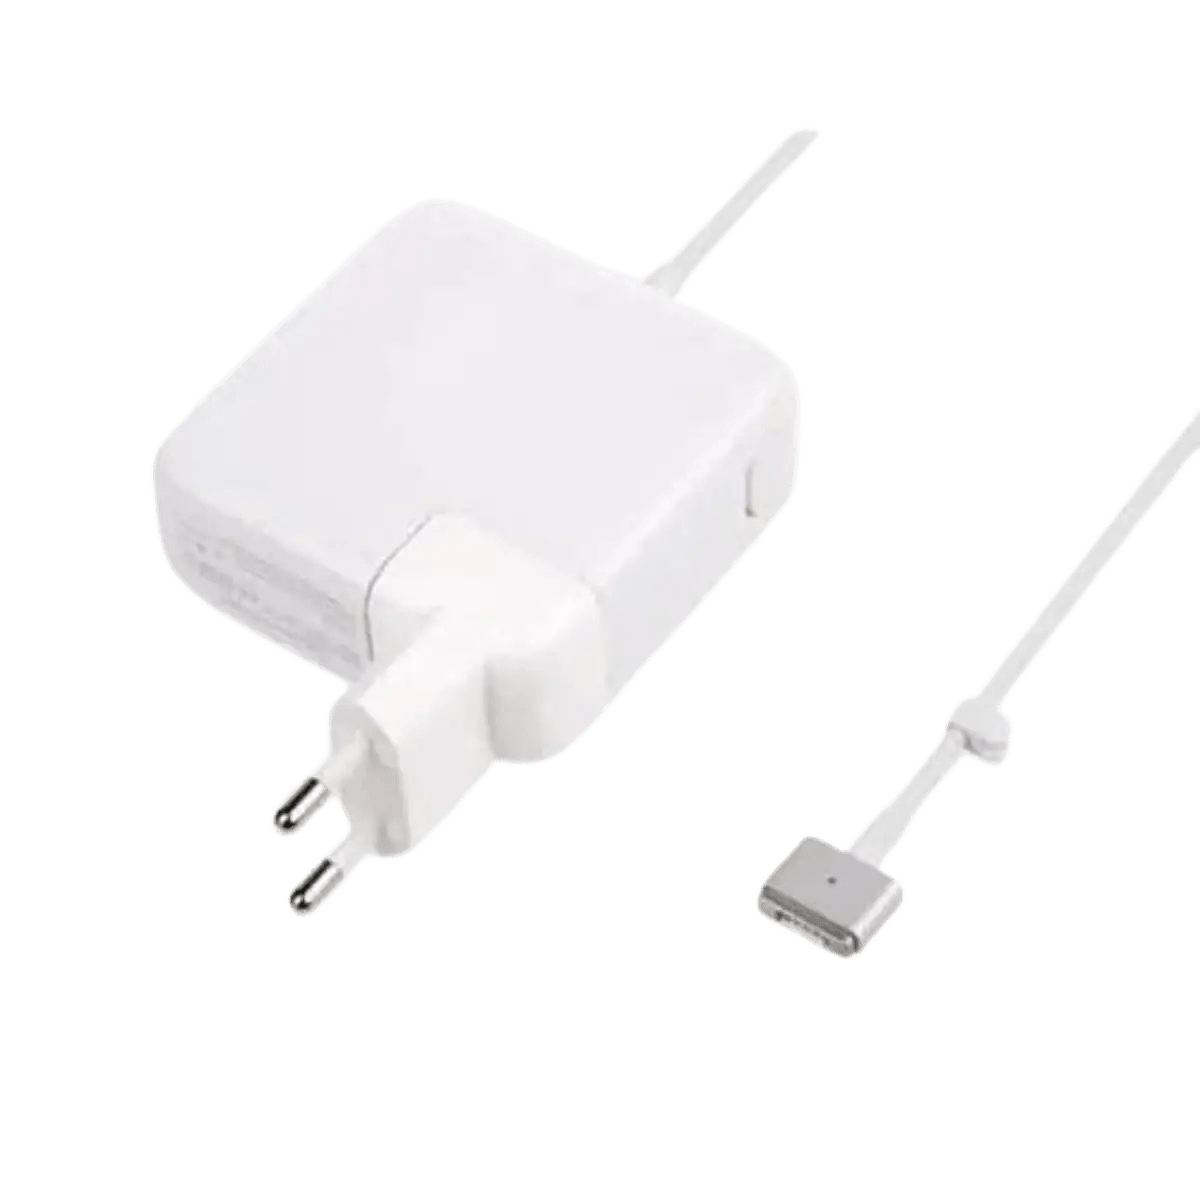 Chargeur MagSafe 2 pour Macbook Air ou Macbook Pro